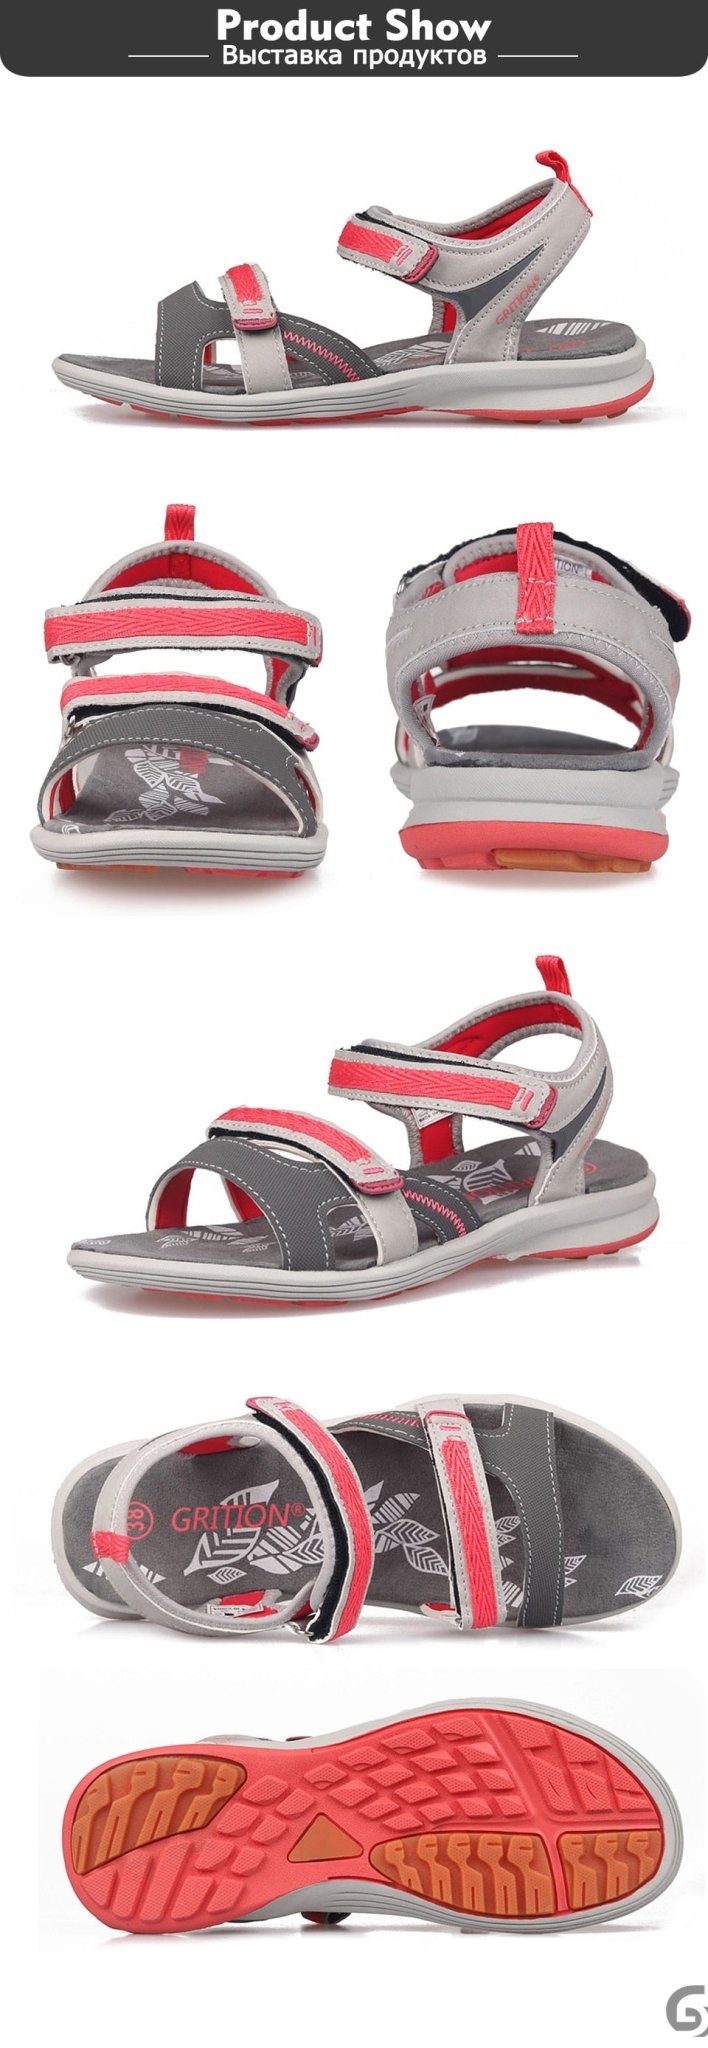 Beach Sandals Women Summer Outdoor Flat Sandals Ladies Open Toe Shoes Lightweight Breathable Walking Hiking Sandals-17